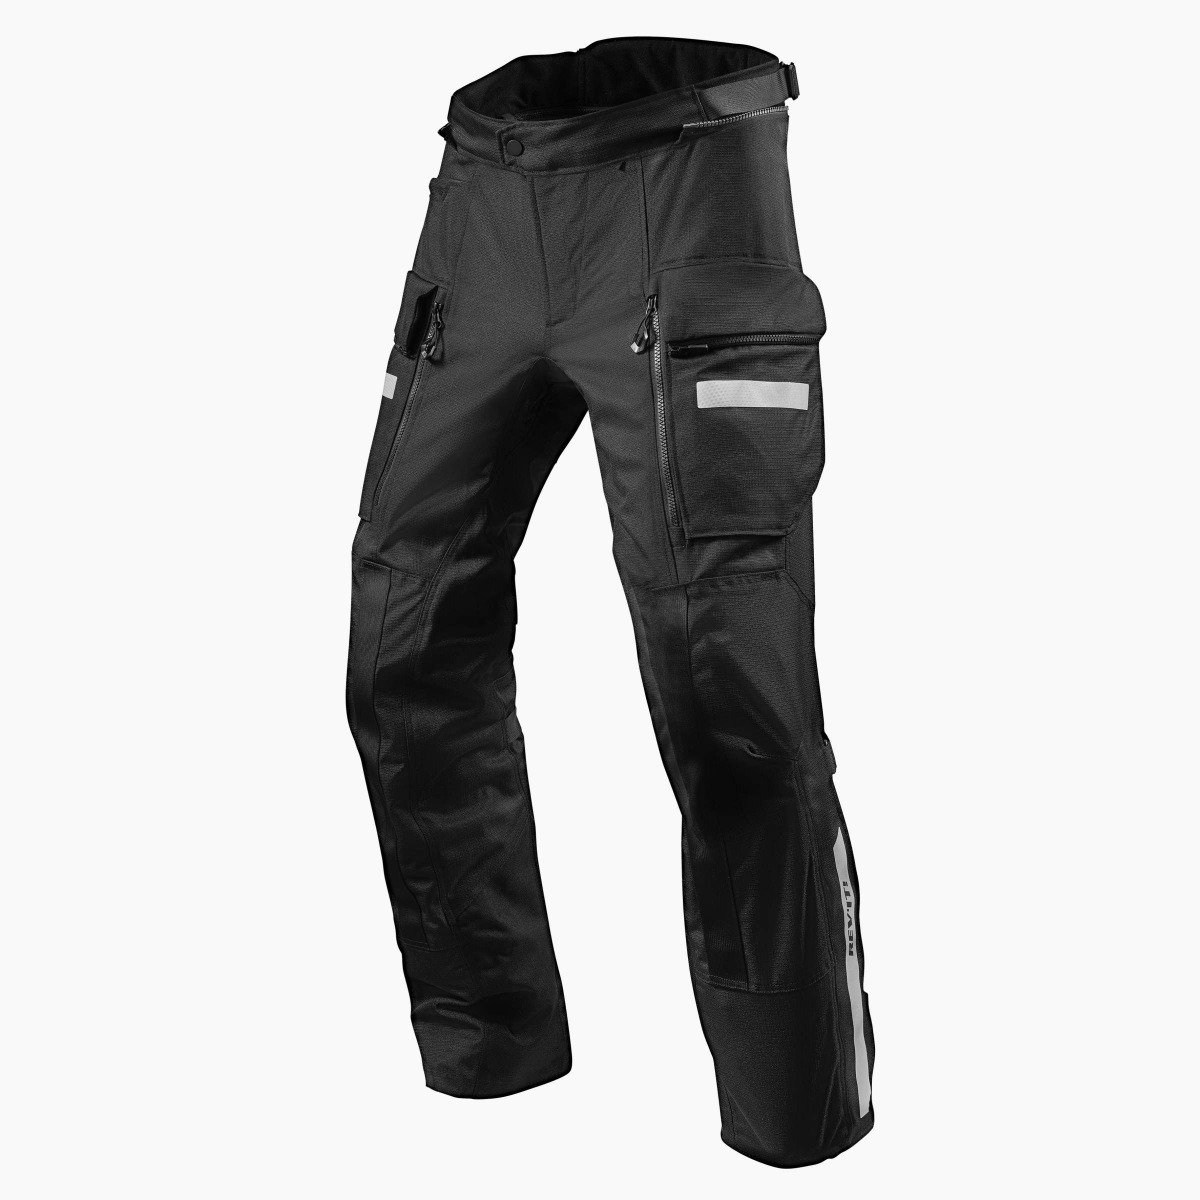 Image of REV'IT! Sand 4 H2O Short Black Motorcycle Pants Talla XL